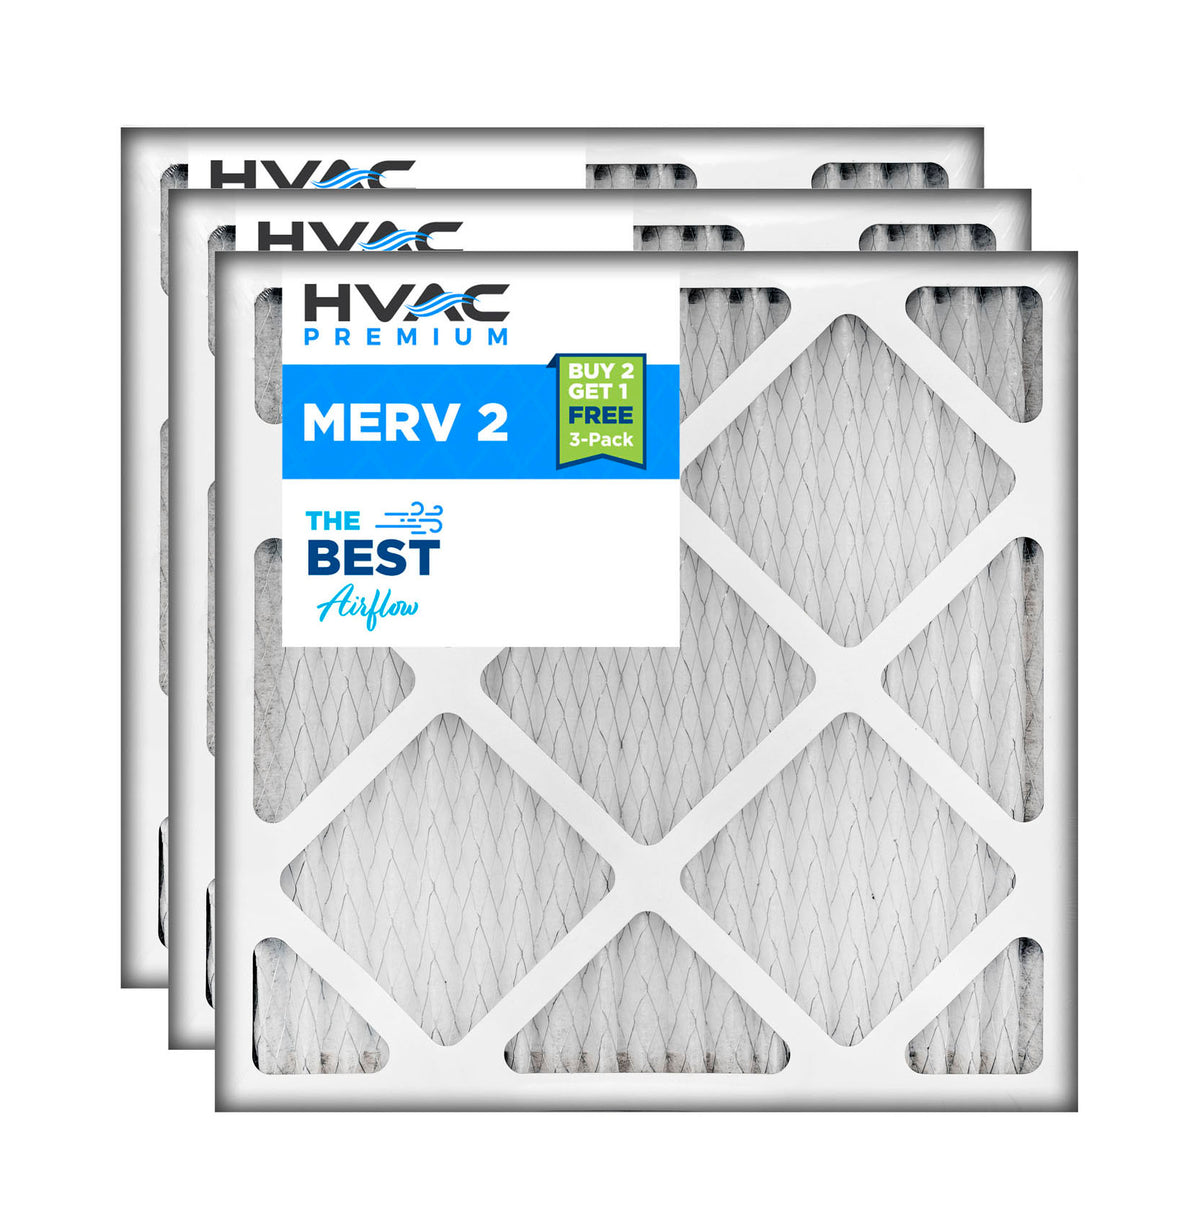 20 x 10 Merv 2 HVAC Pleated Filter, 3-Pack